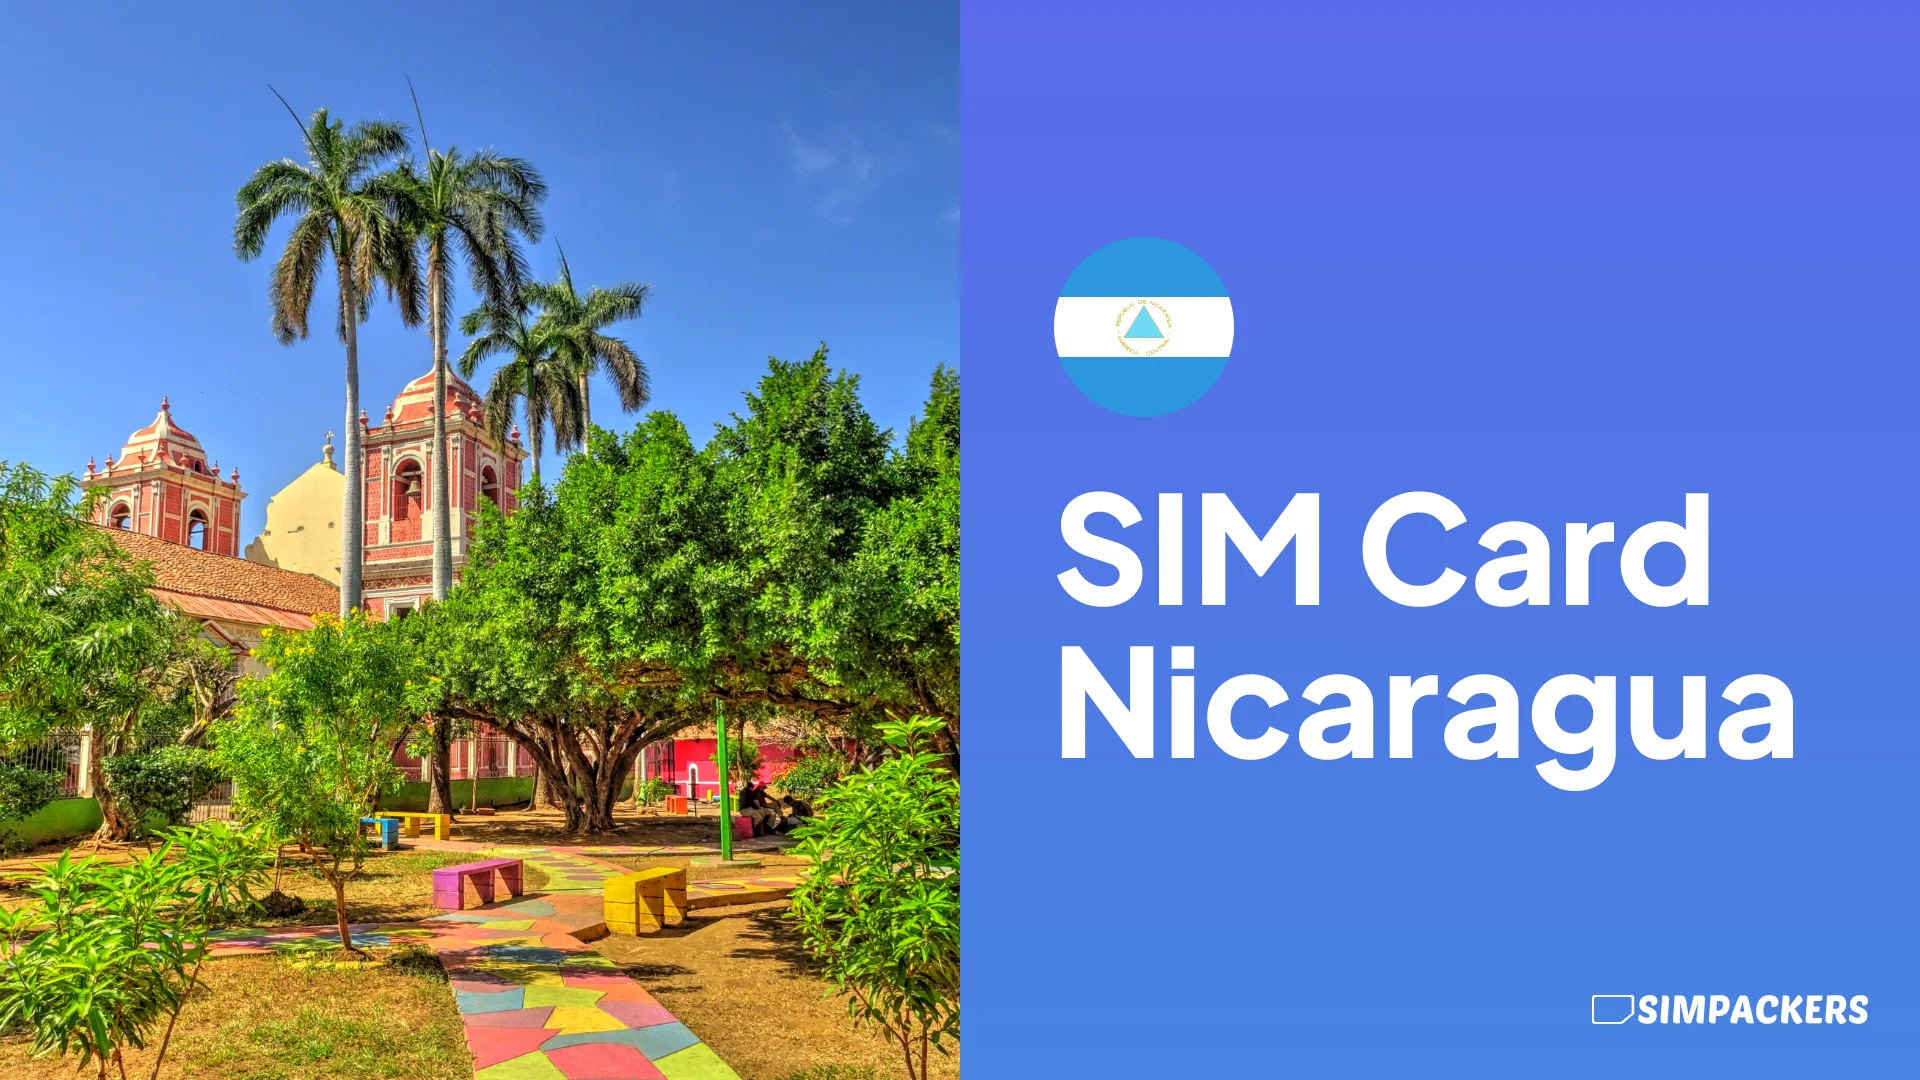 EN/FEATURED_IMAGES/sim-card-nicaragua.webp